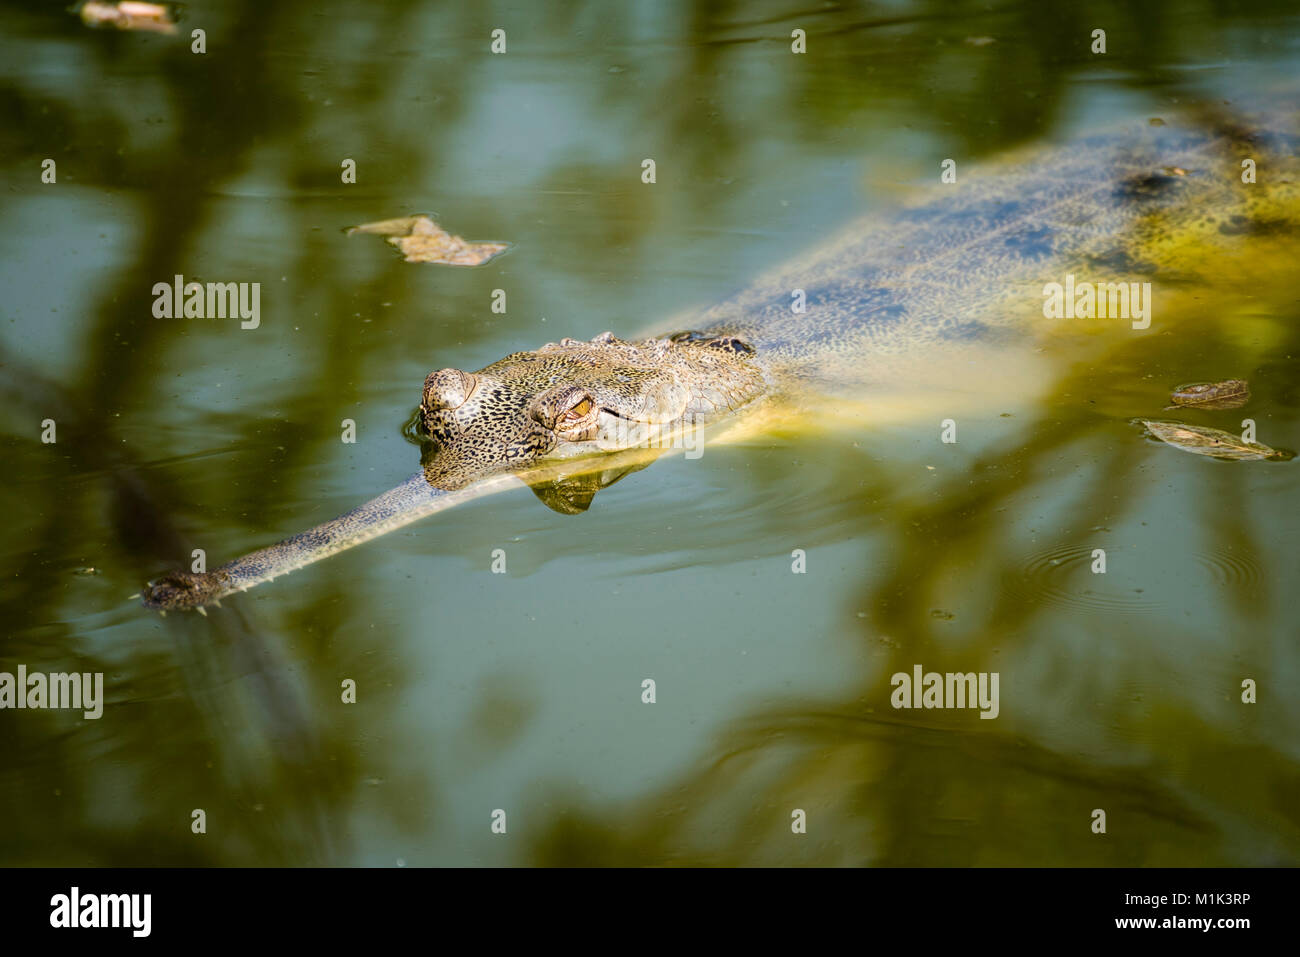 Gharial crocodile in water in Rajkot, India Stock Photo